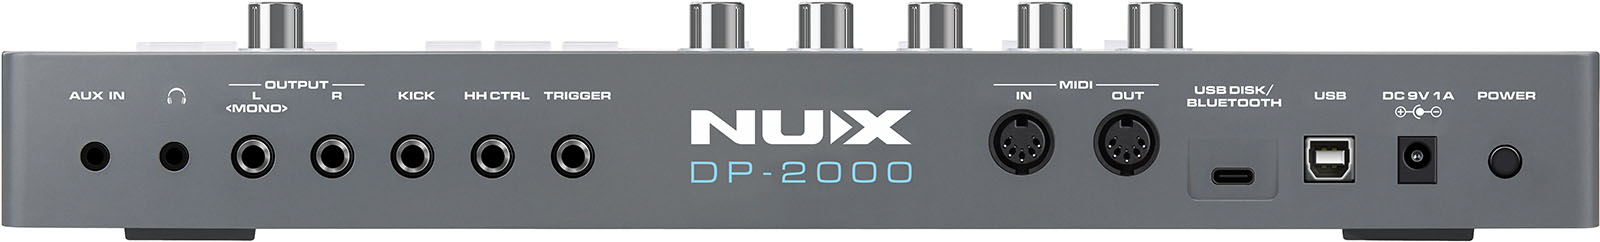 Nux Dp-2000 Multi Pad - E-Drums Multi pad - Variation 1